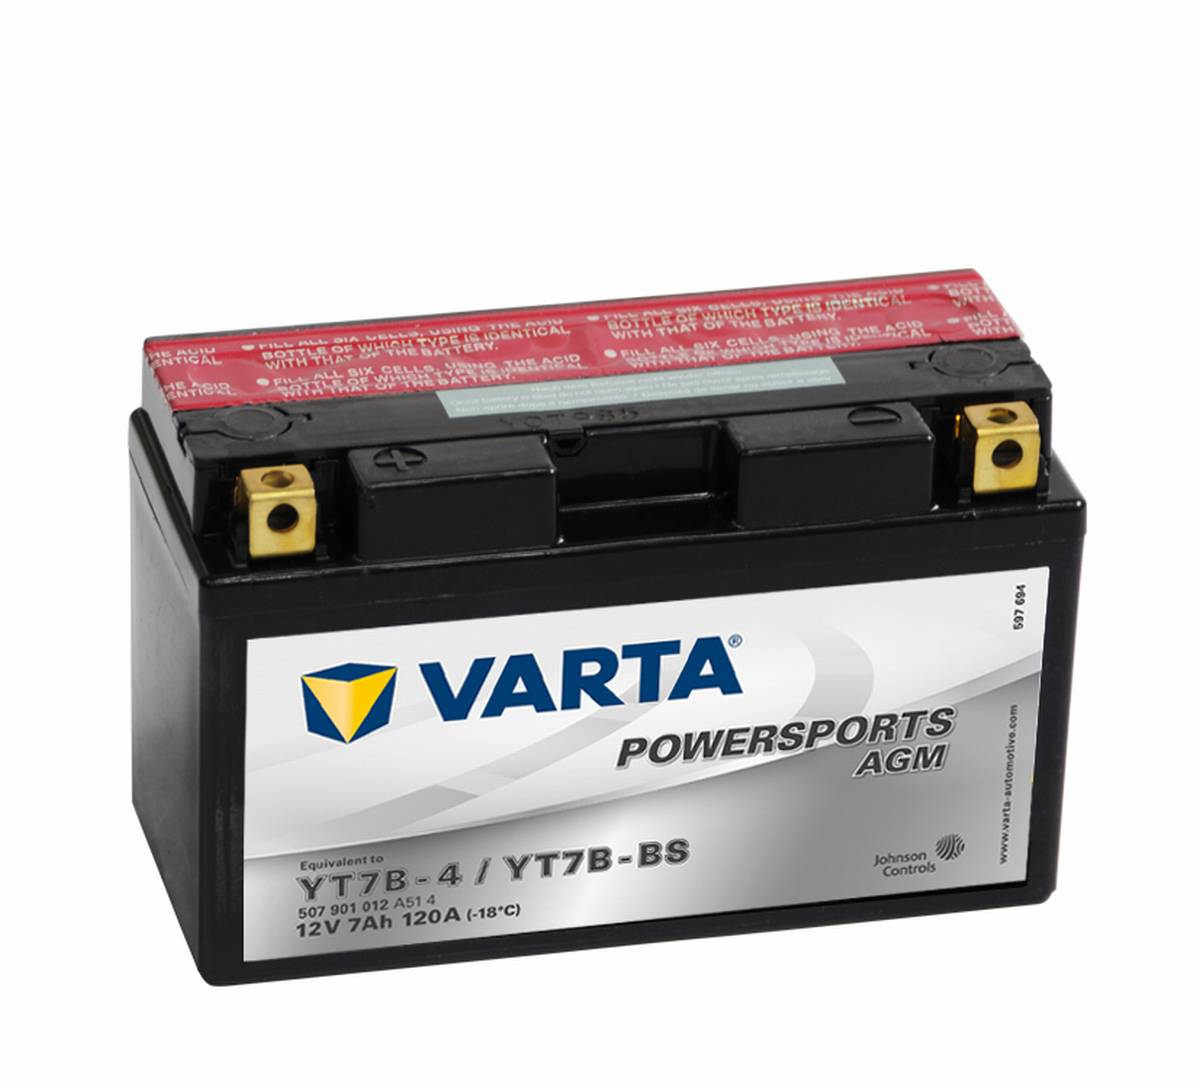 Varta Powersports AGM YT7B-4 Motorcycle Battery YT7B-BS 507901012 12V 7Ah  120A, Starter batteries, Motorbike, Car batteries, Batteries by  application